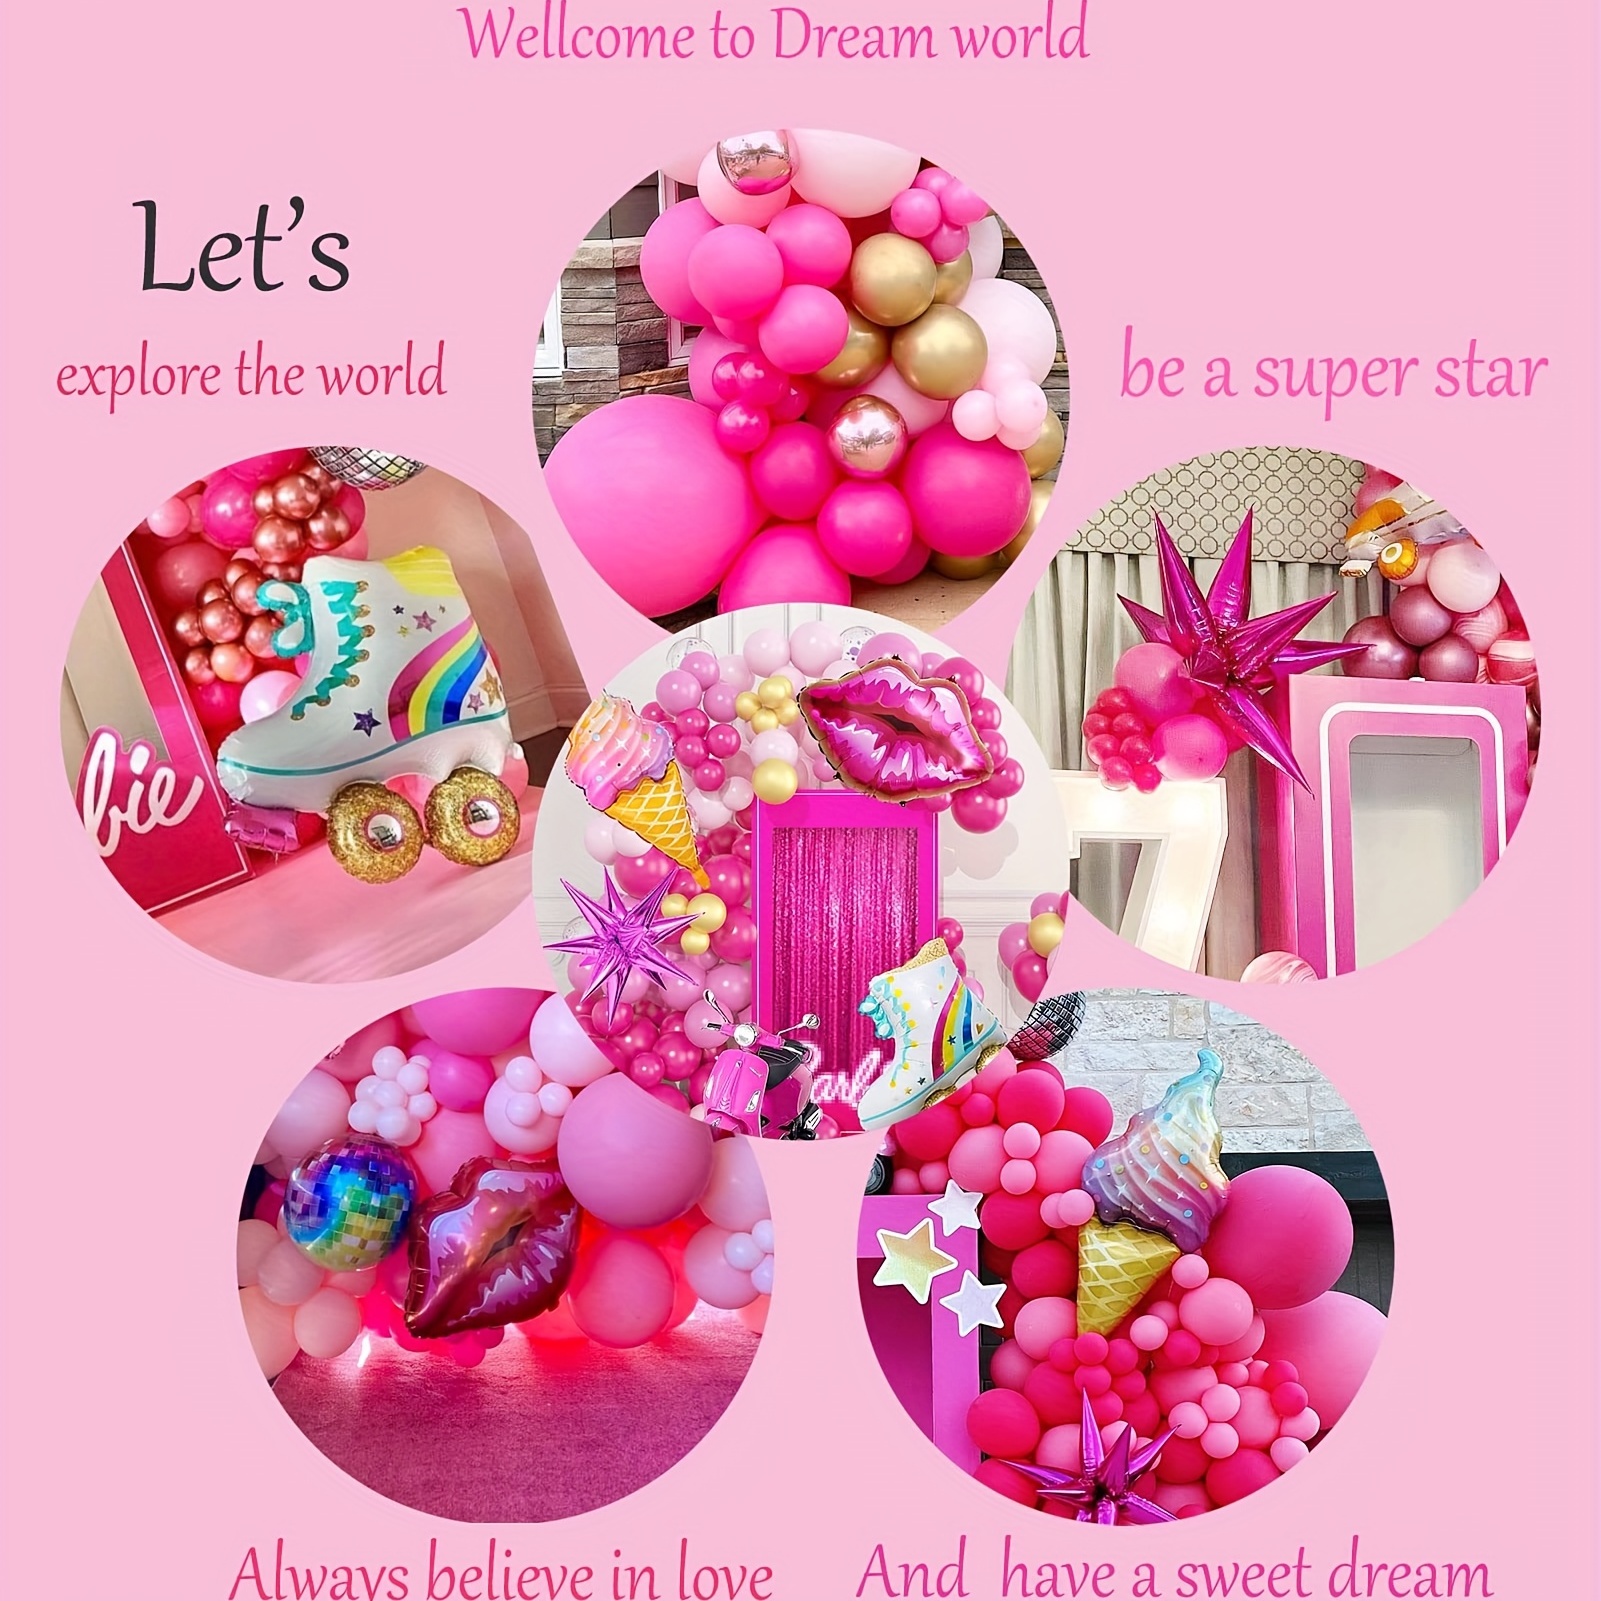 Barbie balloon decoration, Barbie balloon Garland, Barbie balloon arch